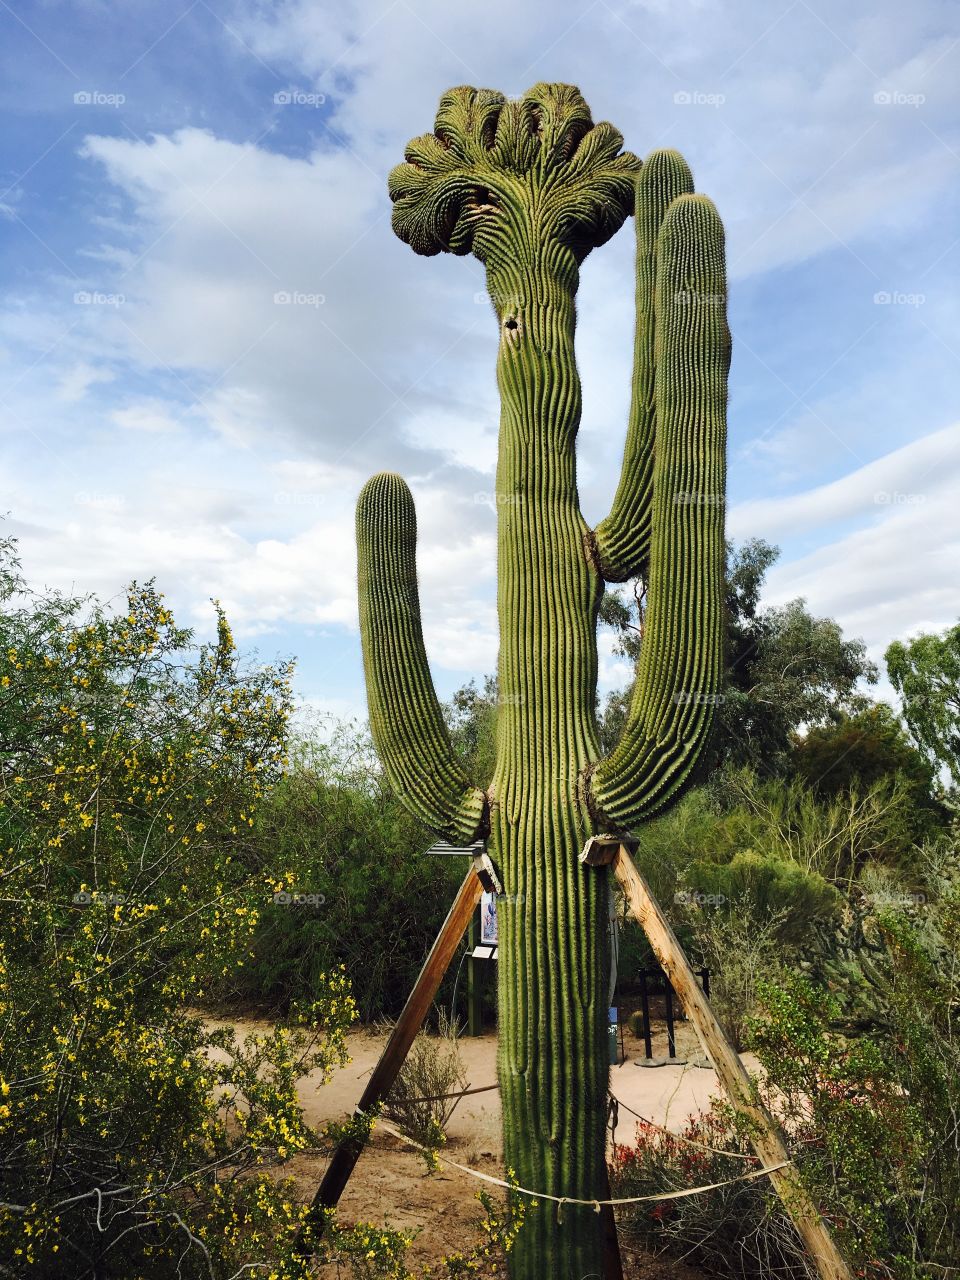 A mutated saguaro at the Phoenix, AZ botanical gardens.